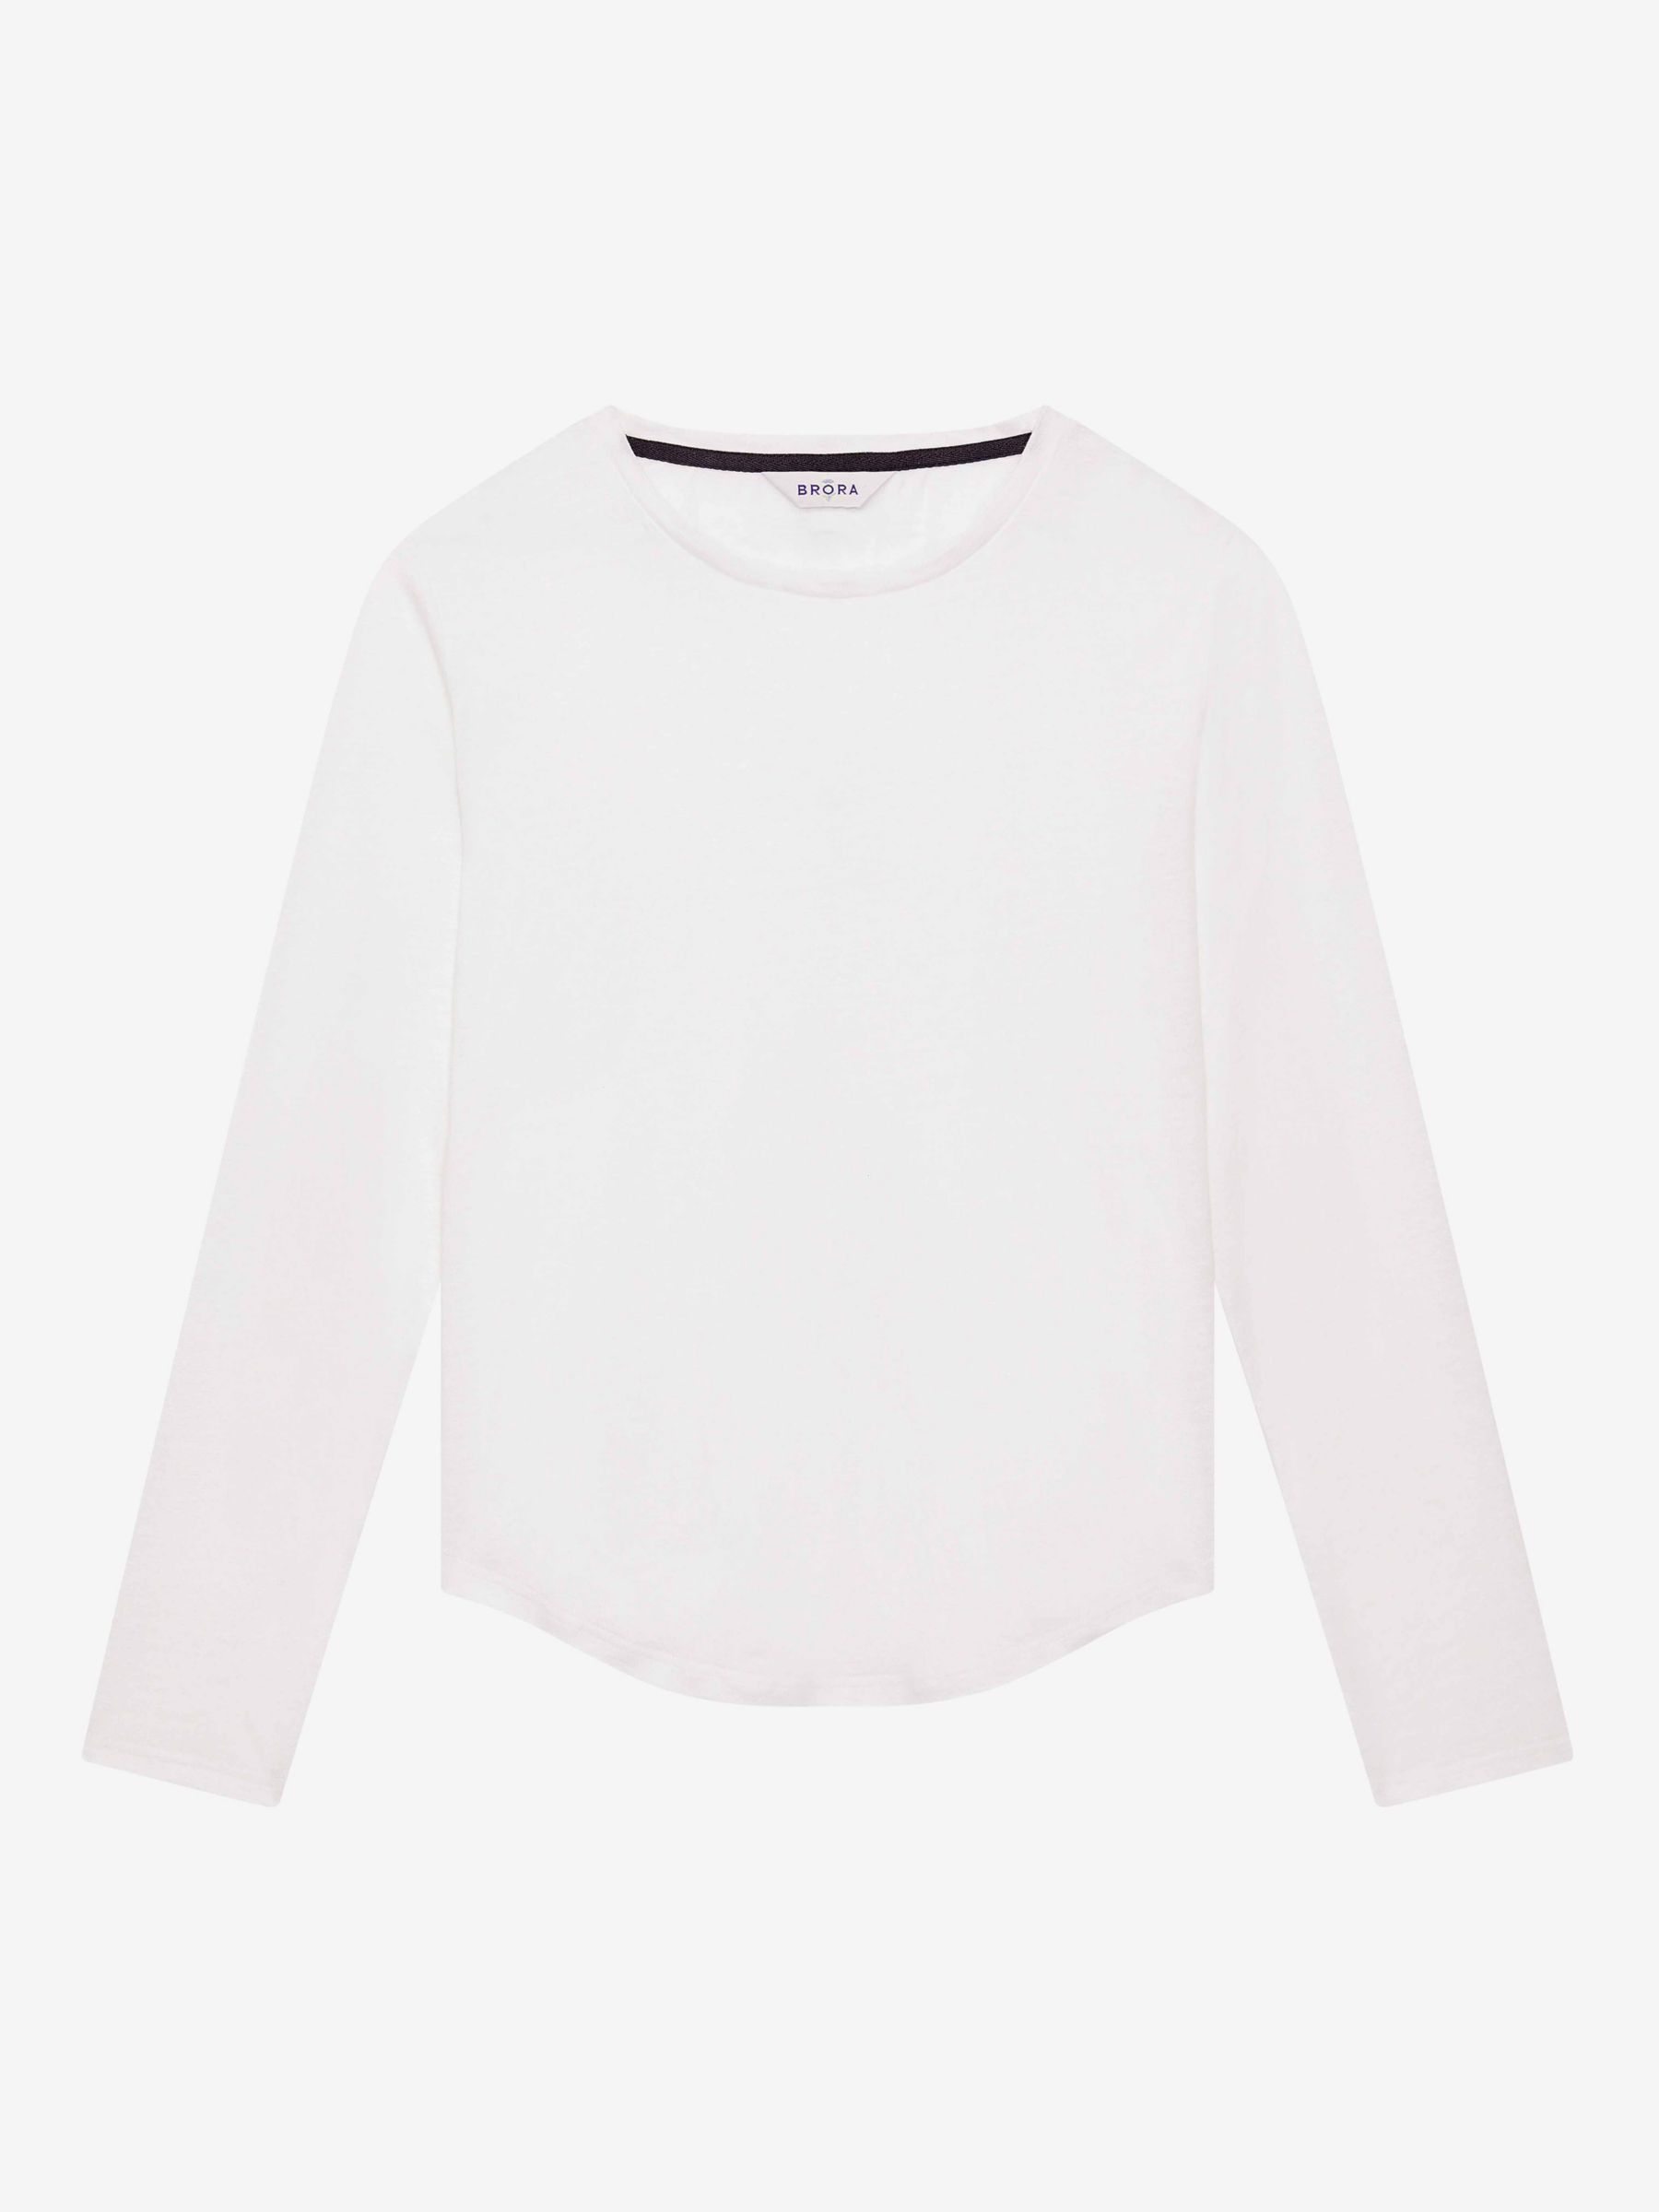 Brora Linen Boat Neck T-Shirt, White, 6